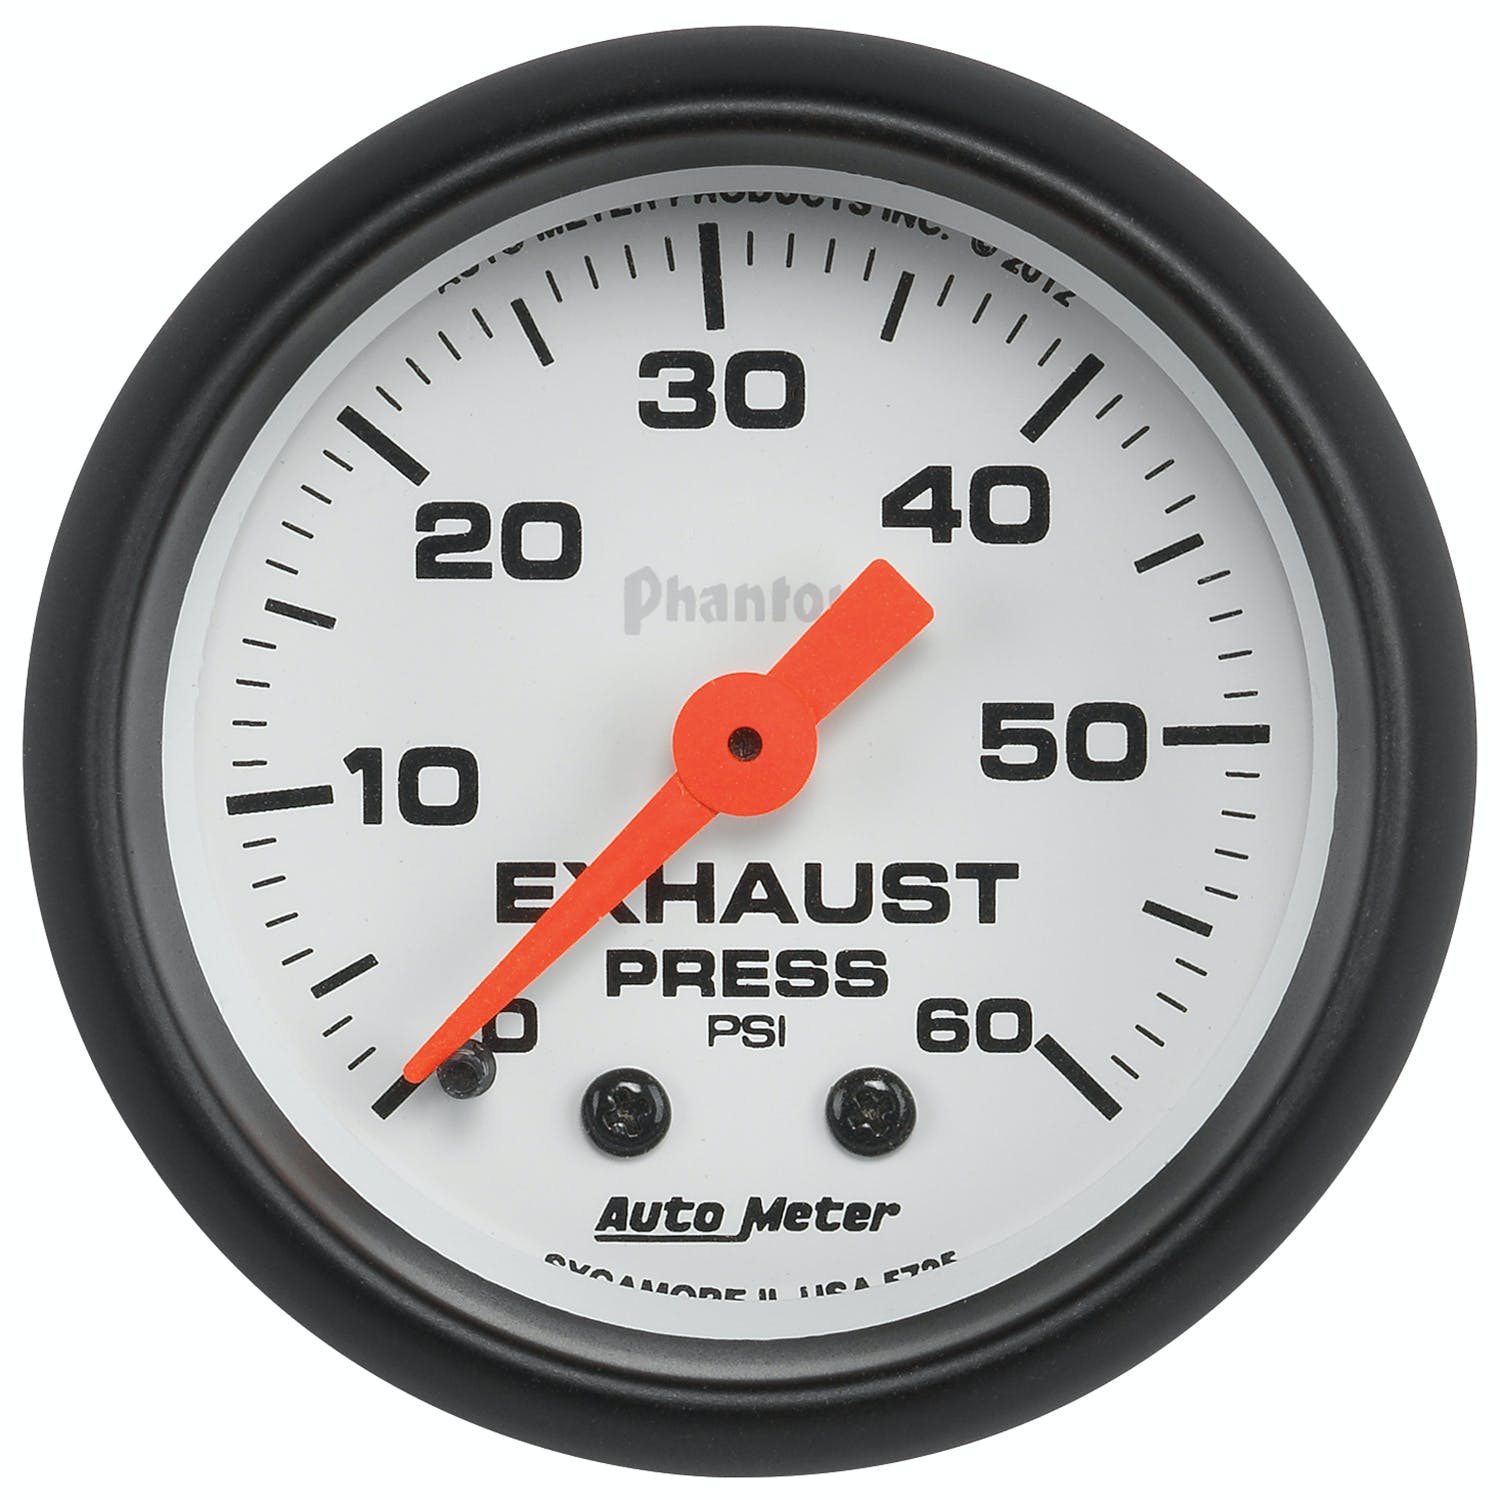 AutoMeter Products 5725 Phantom Mechanical Exhaust Pressure Gauge